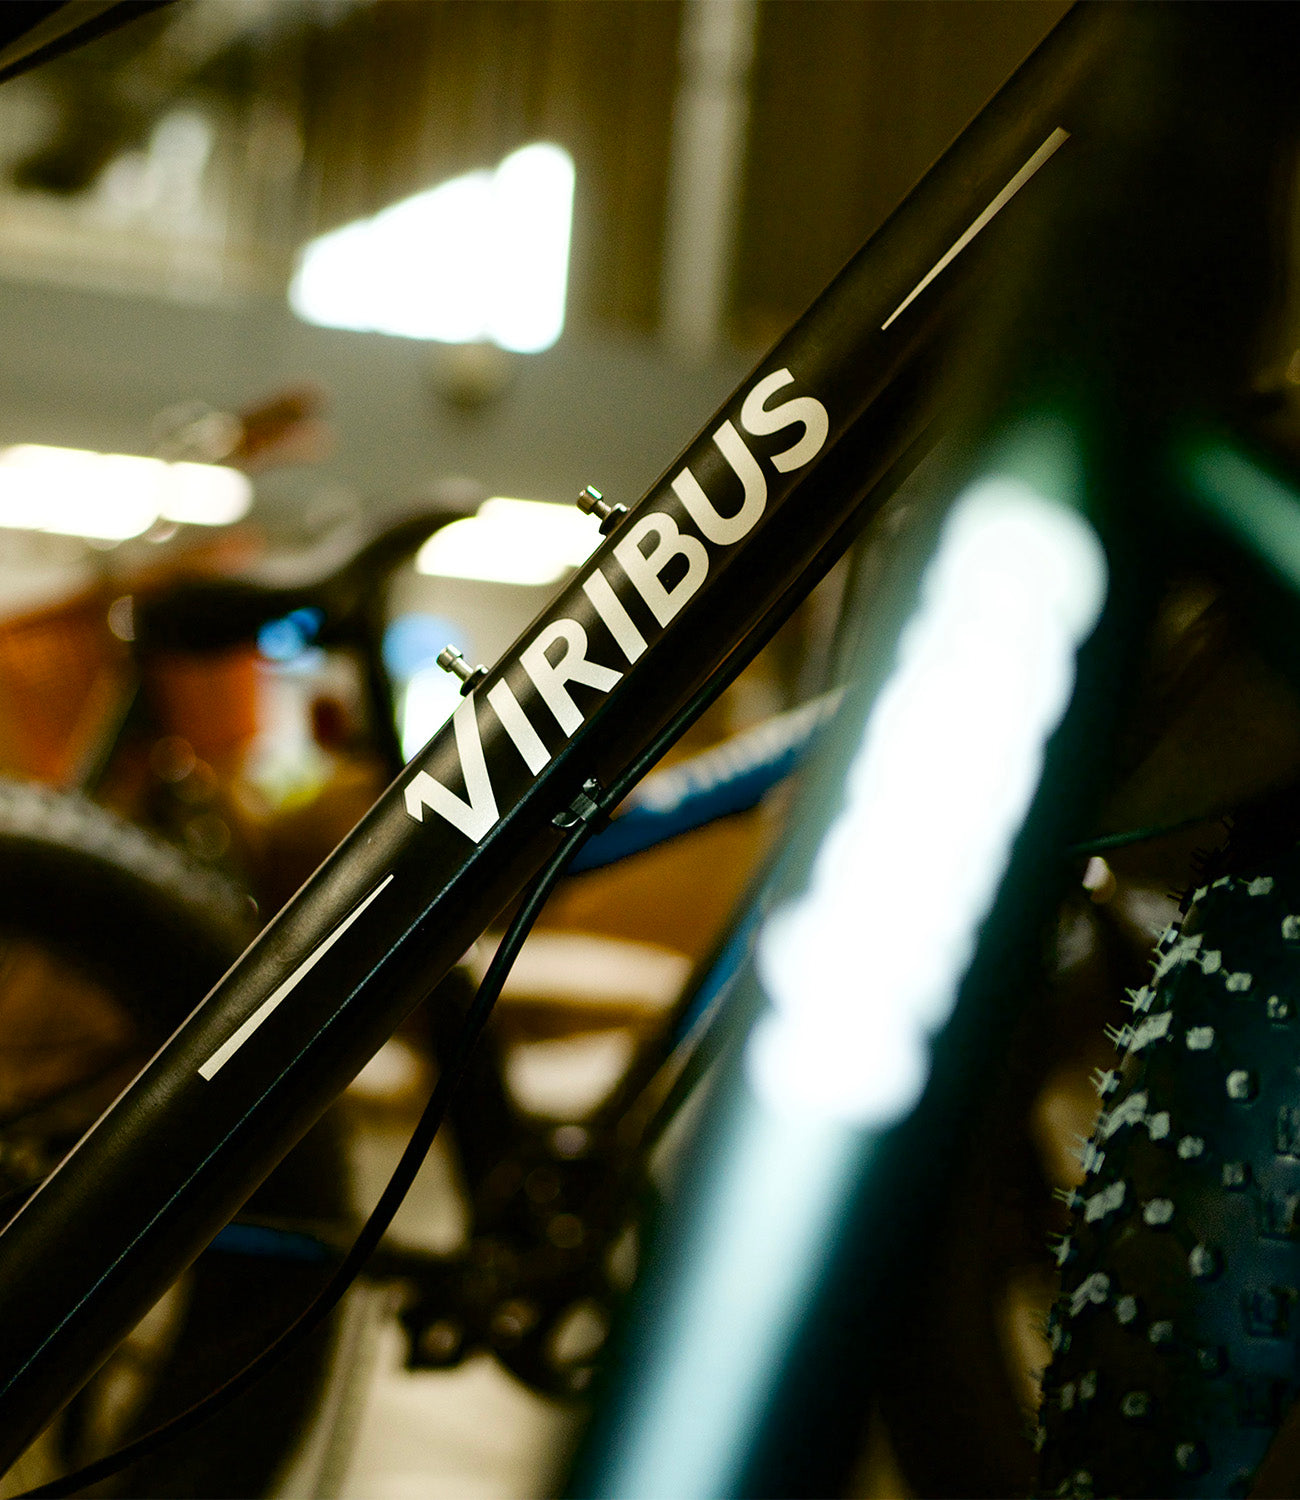 About Viribus bicycle - Viribus technology